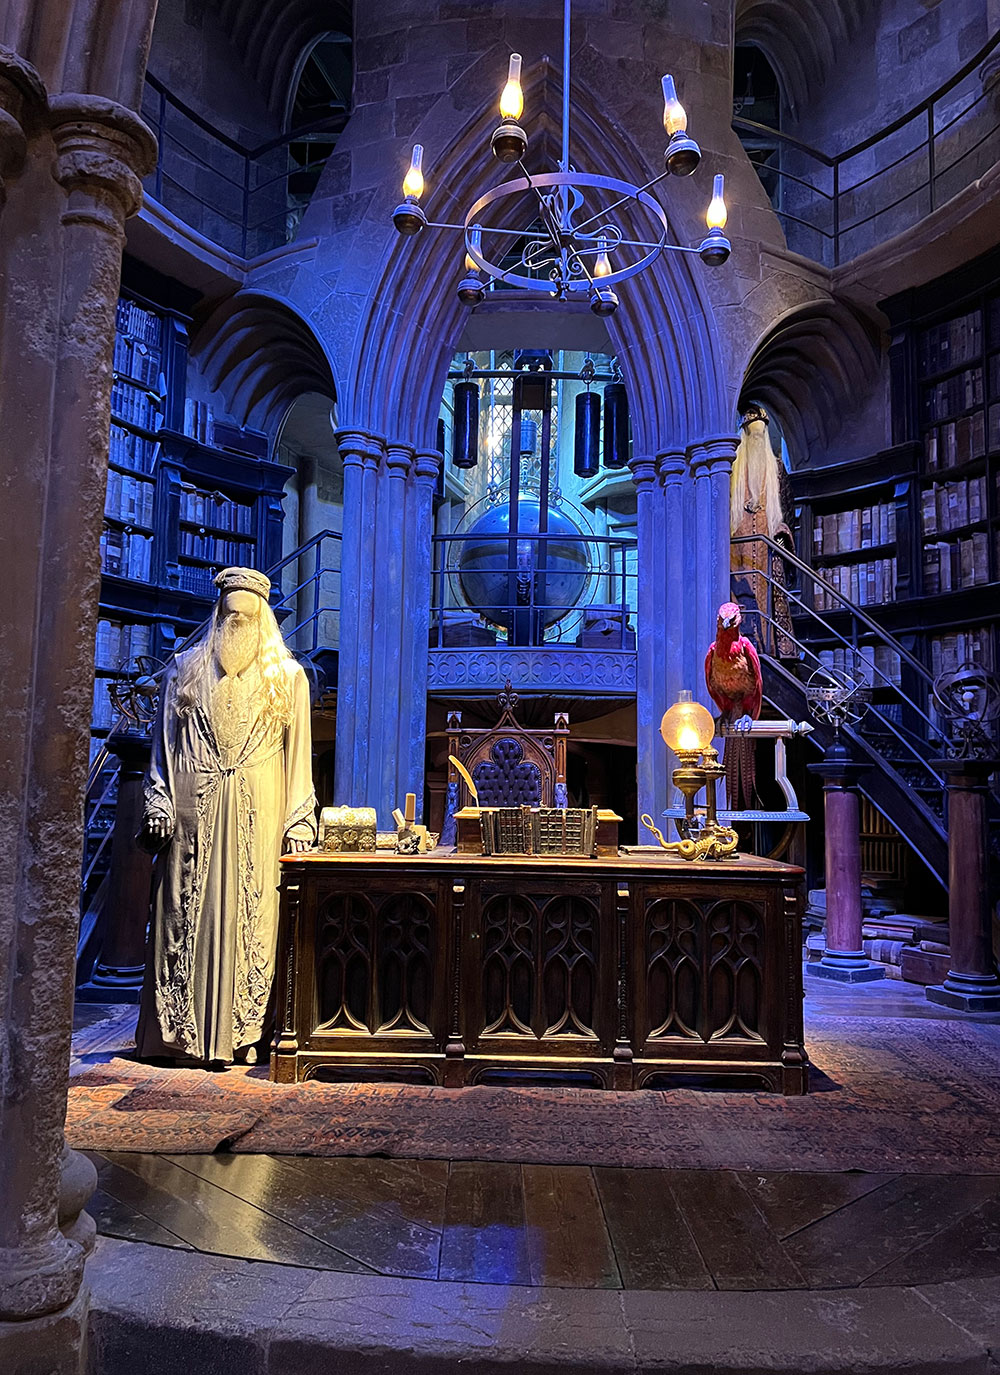 Dumbledore's office in Hogwarts